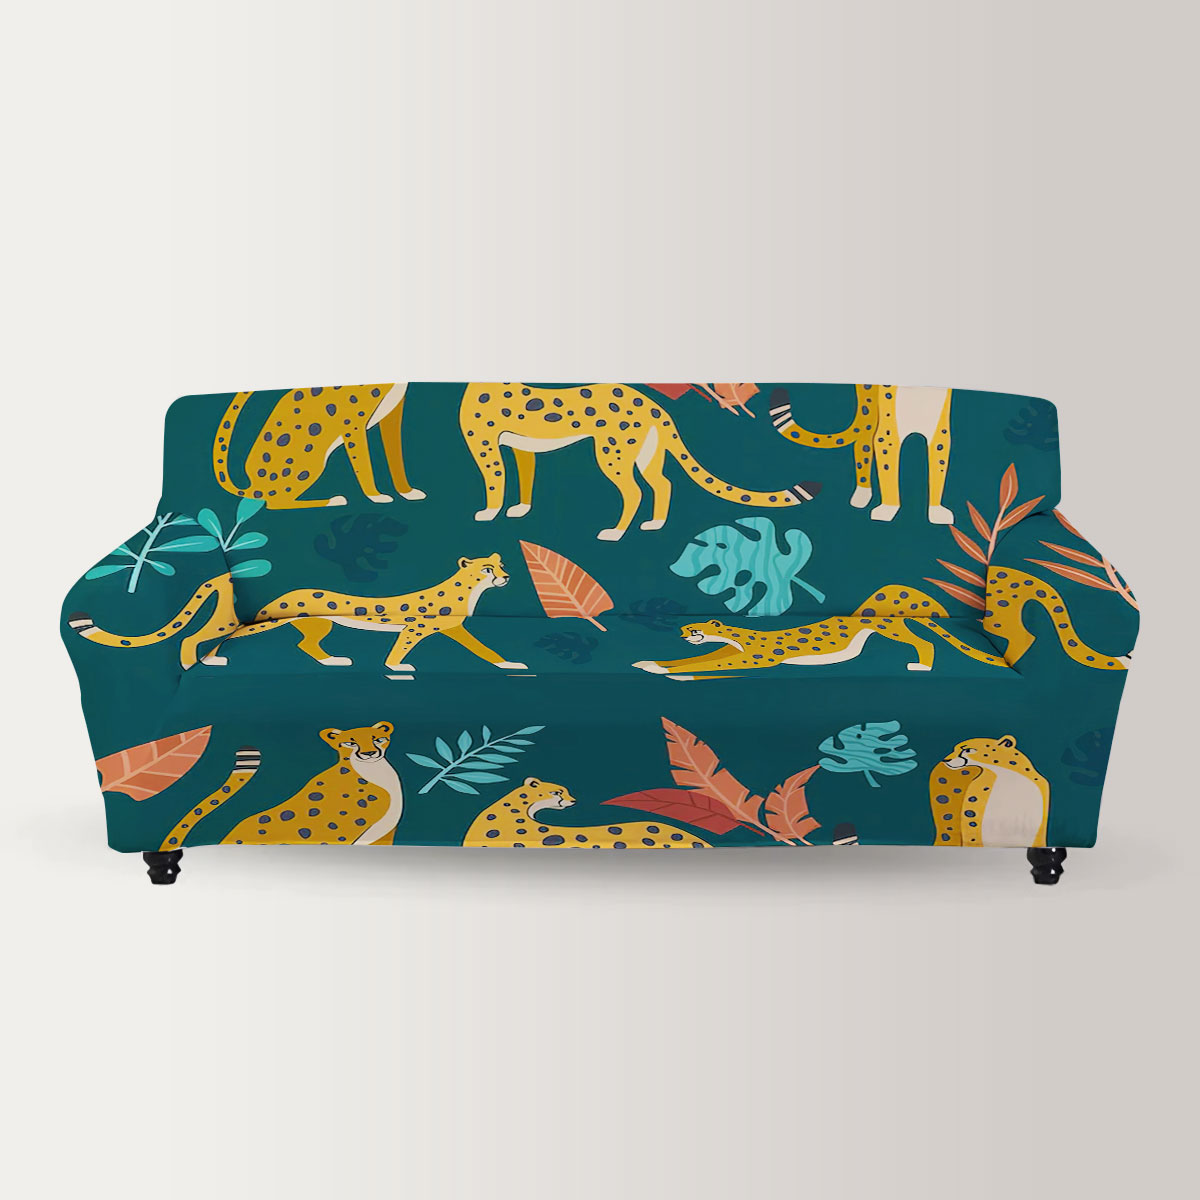 Leopard Family Sofa Cover